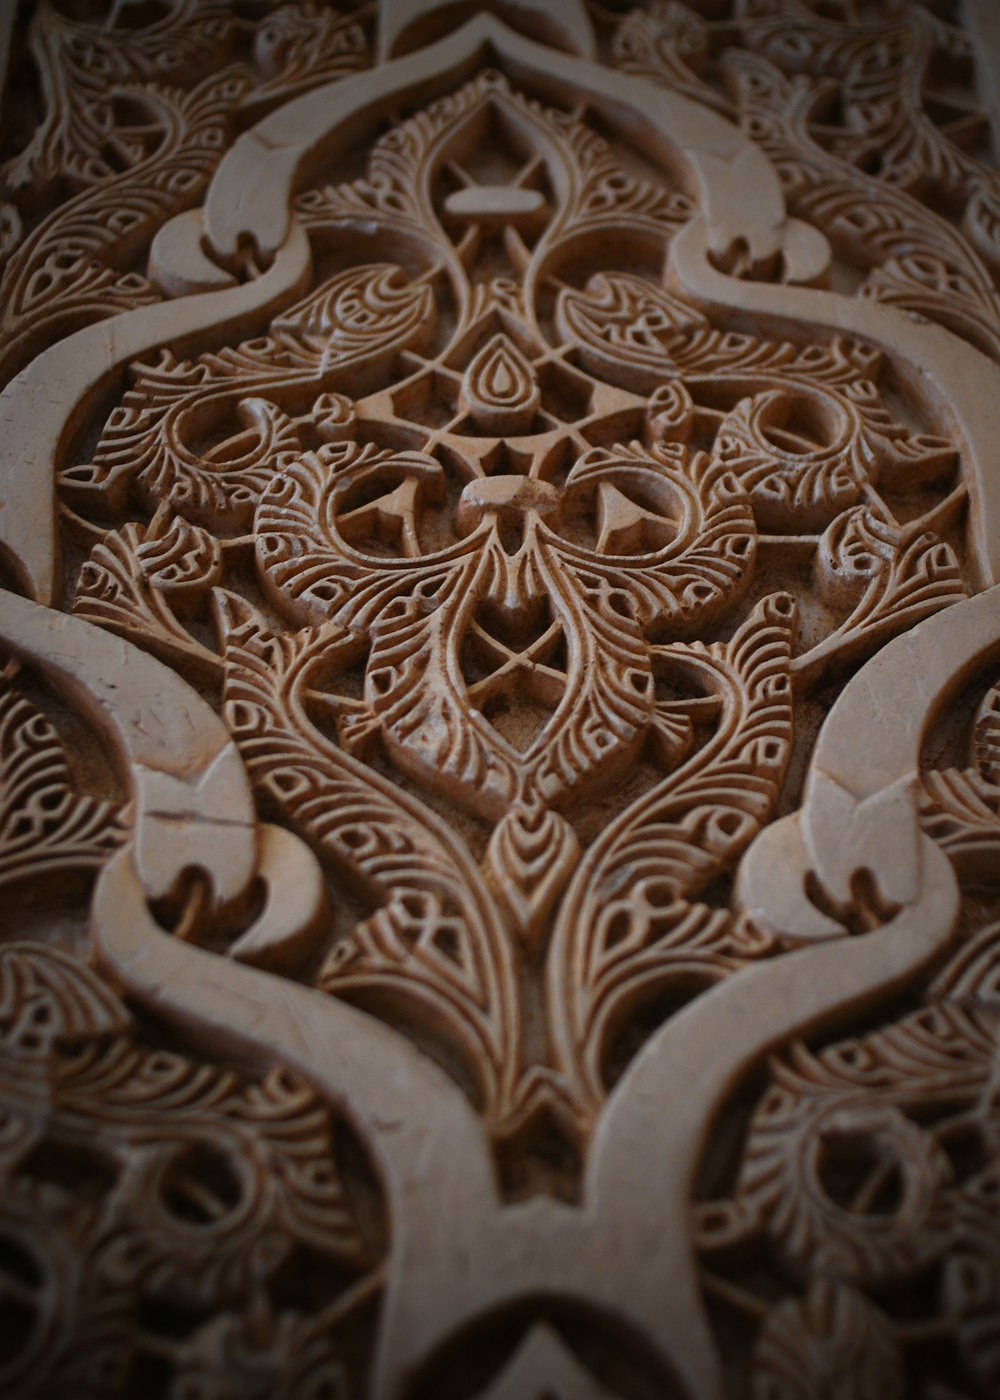 a close up view of a decorative tile